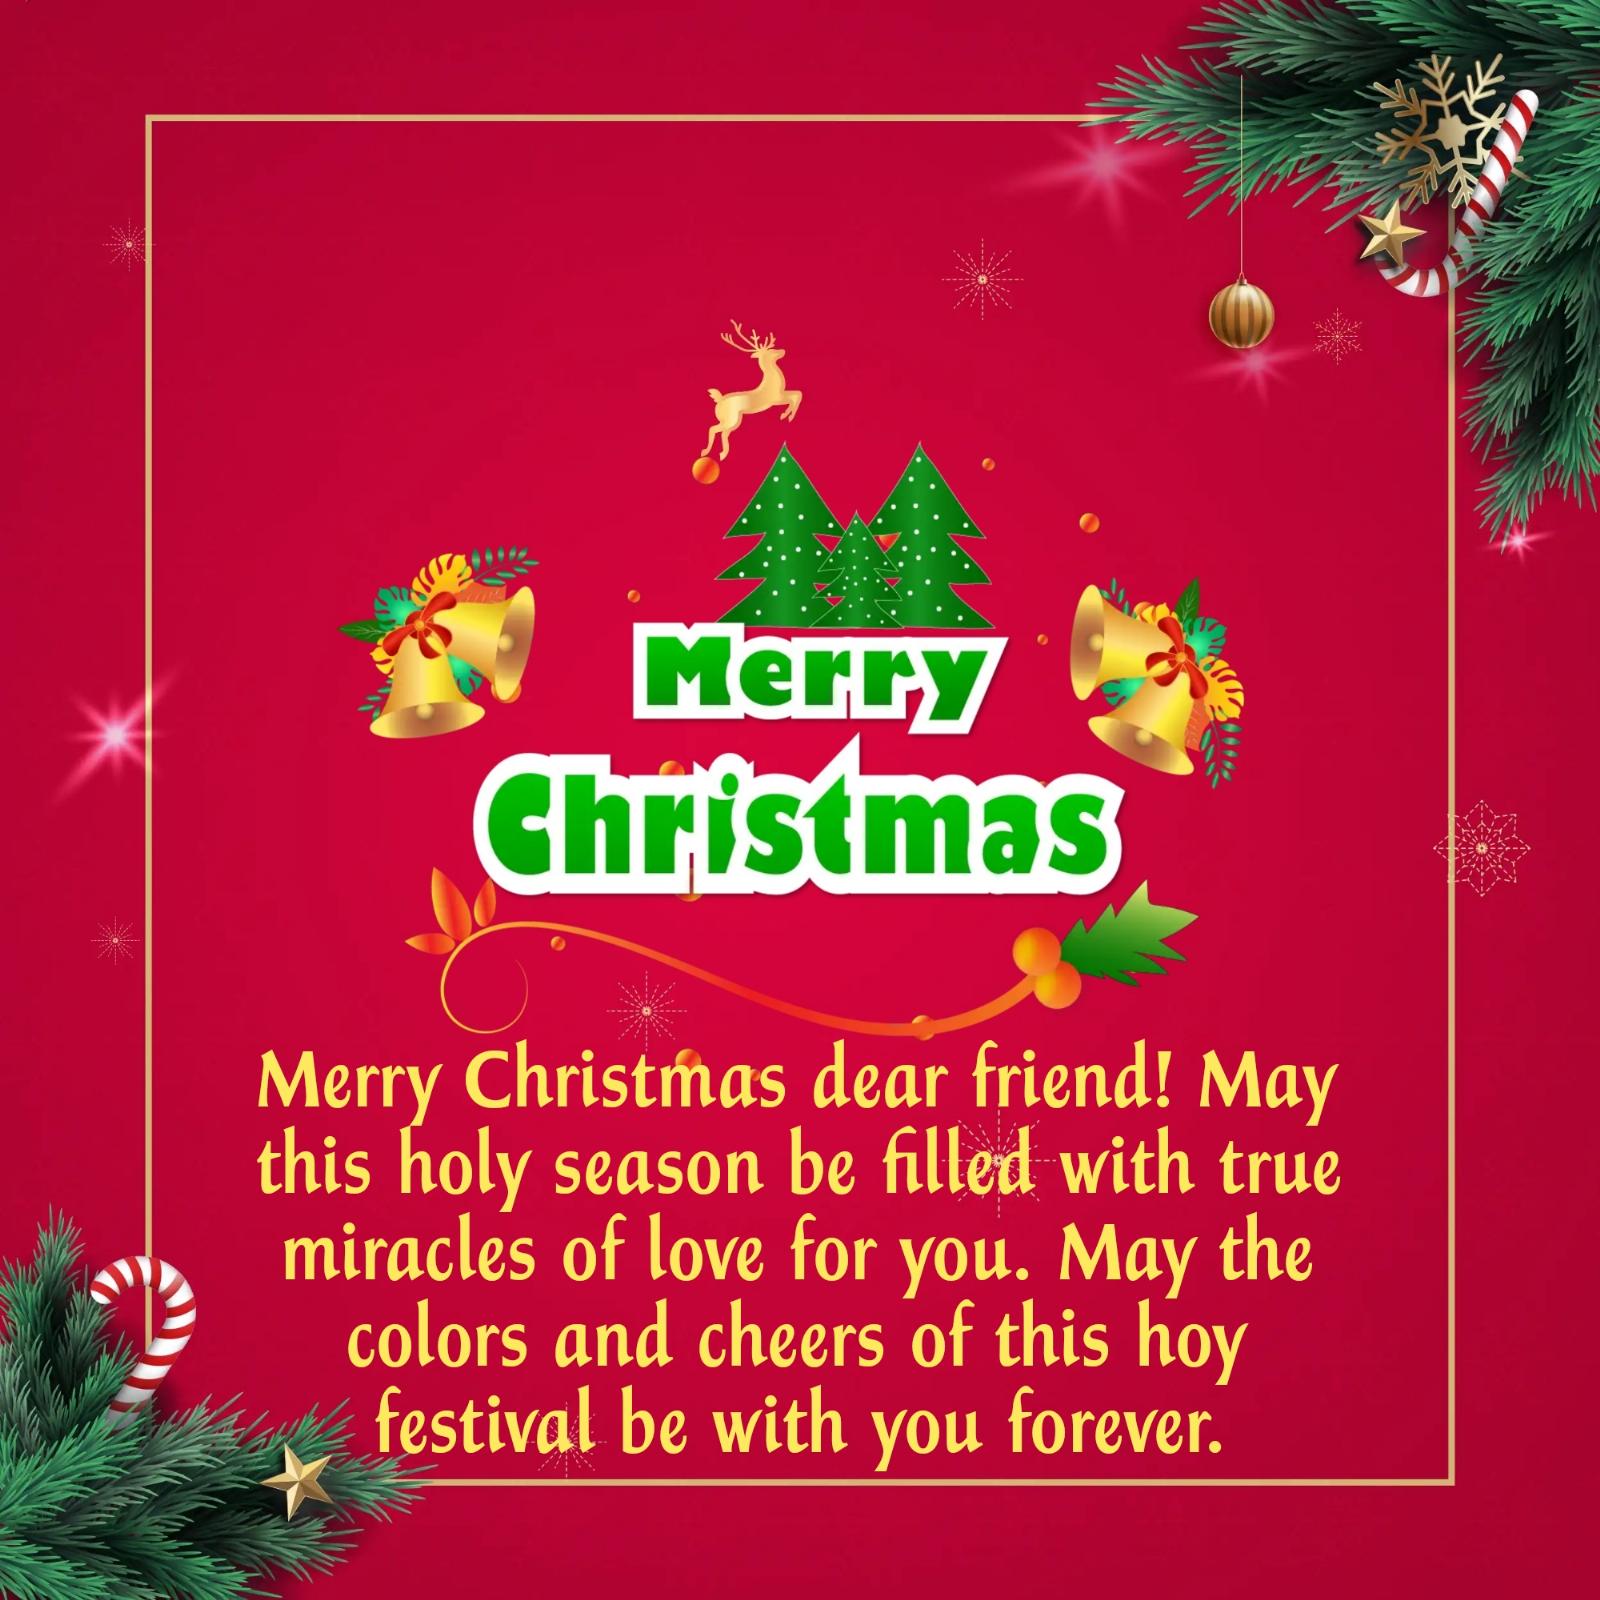 Merry Christmas dear friend